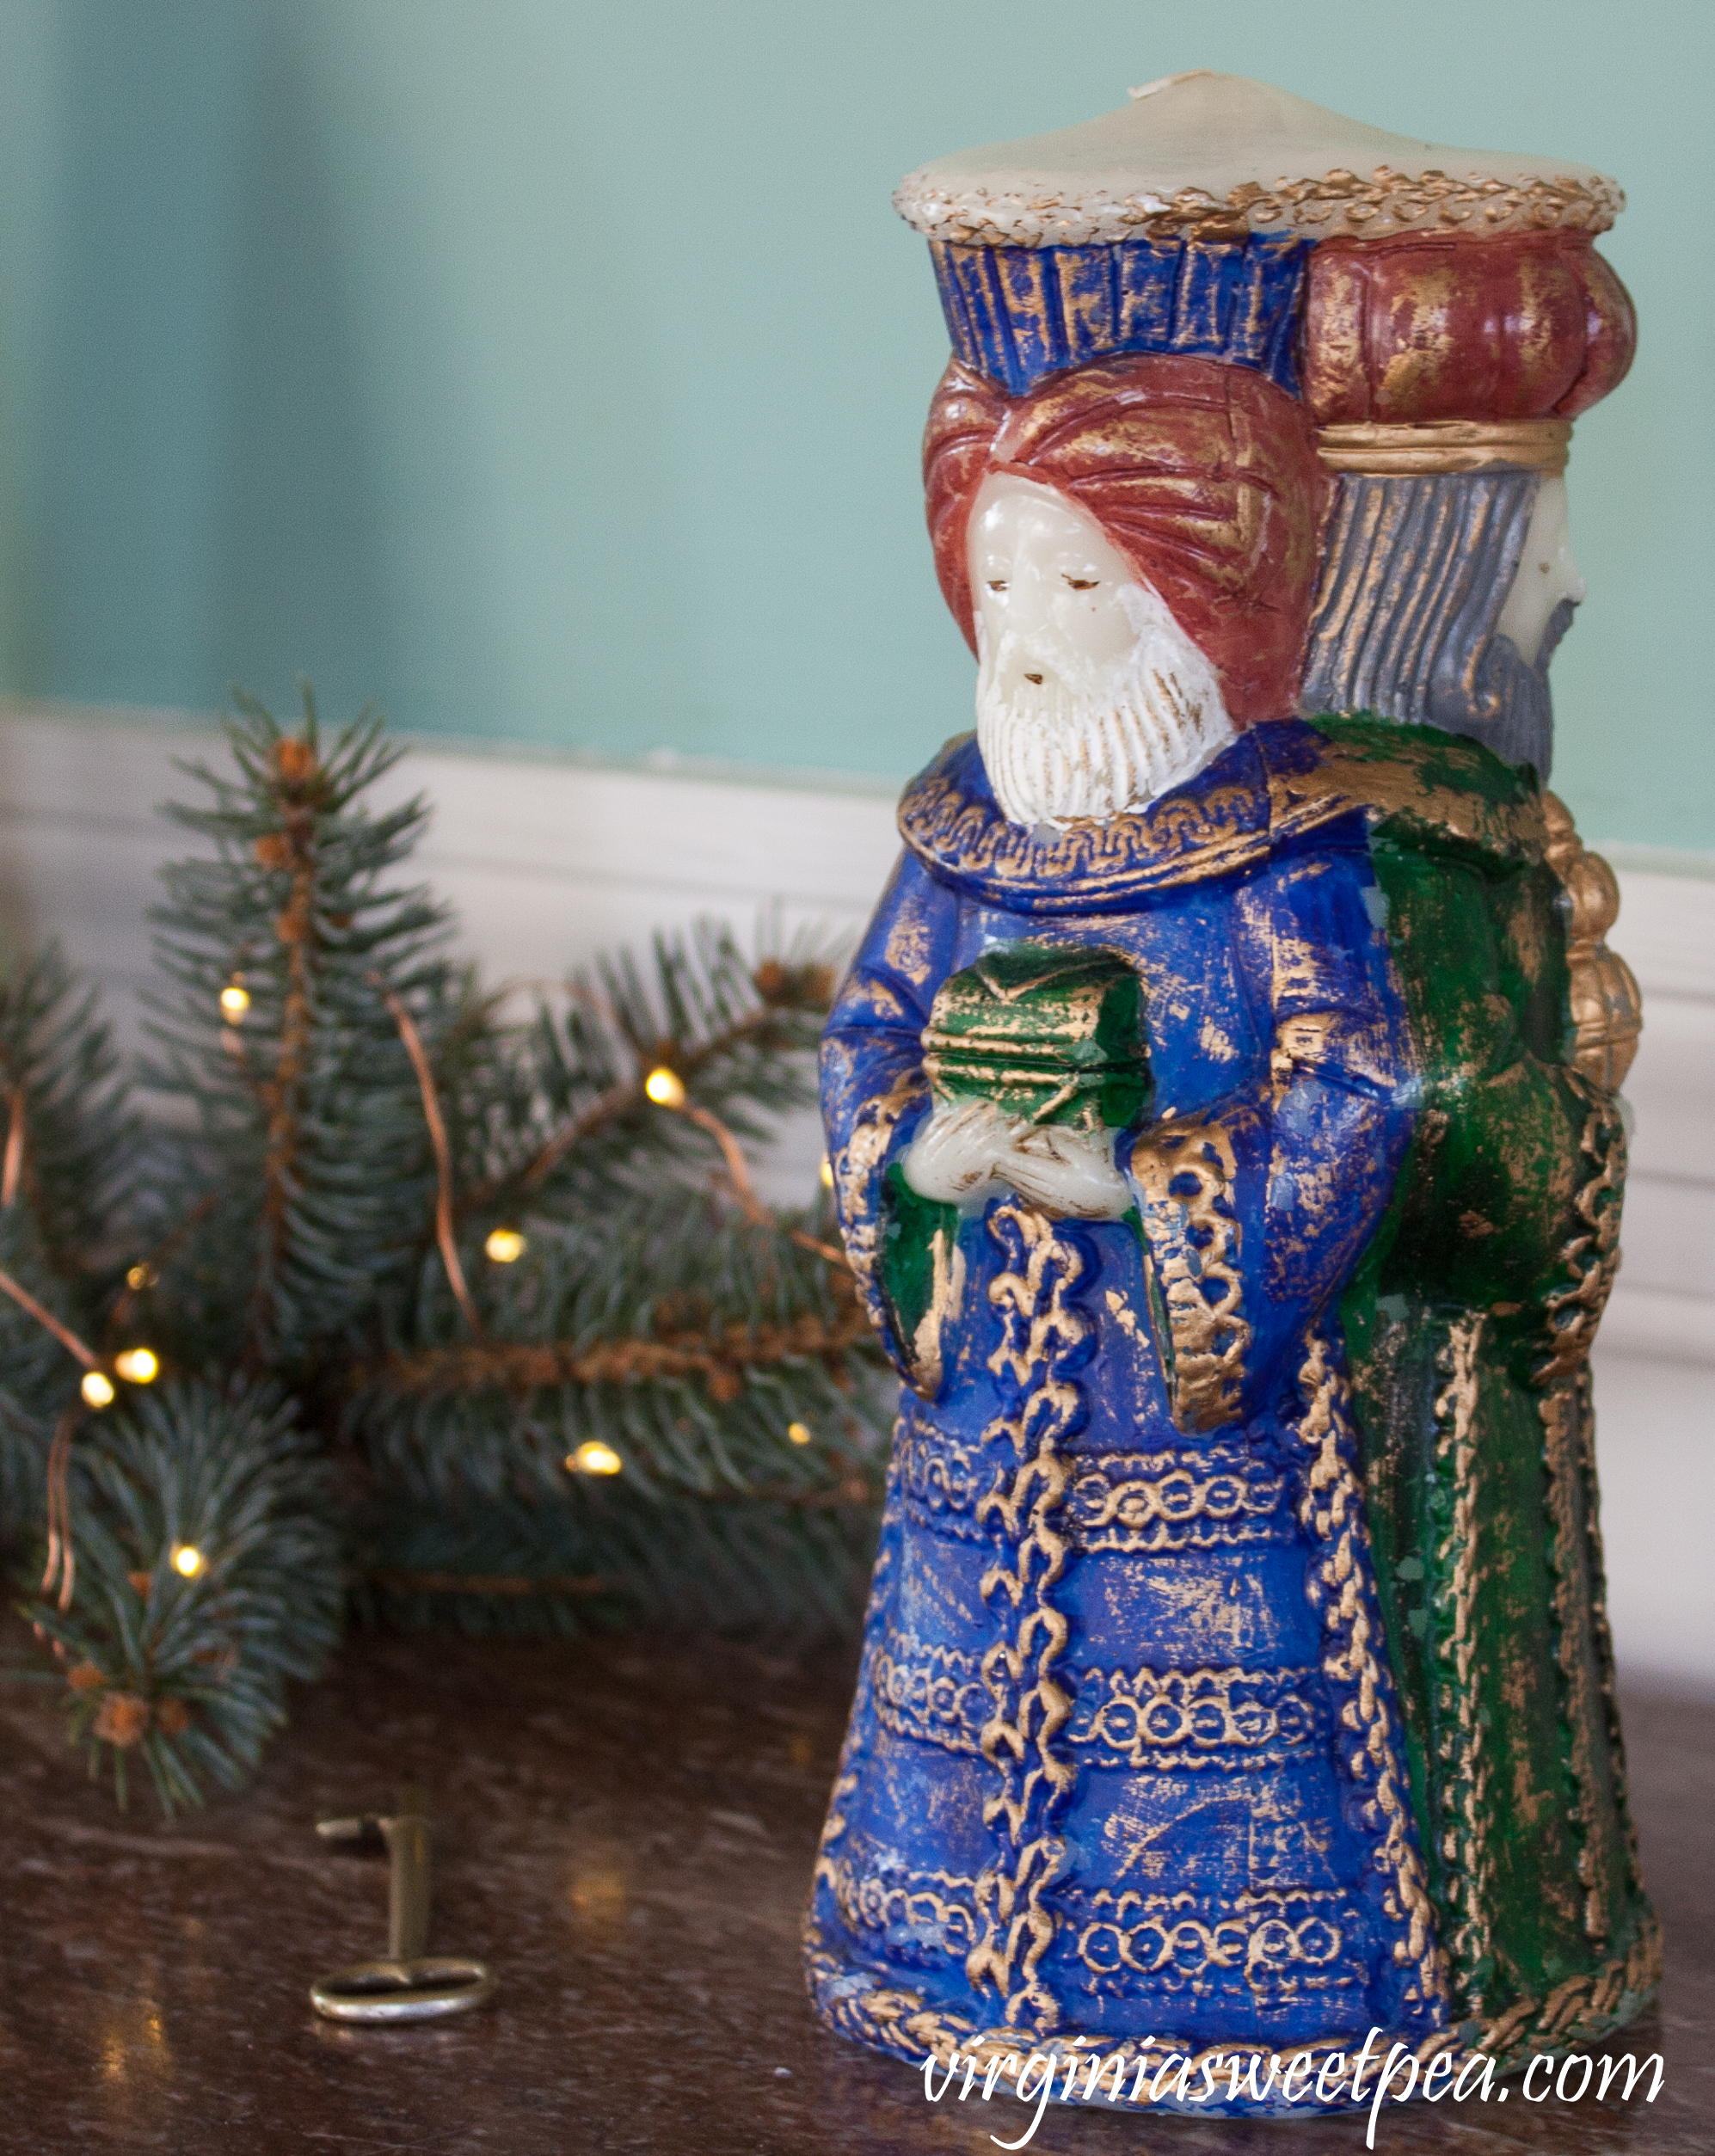 Vintage 3 Wise Men Christmas Candle #vintage #vintagechristmas #christmascandle #3wisemen